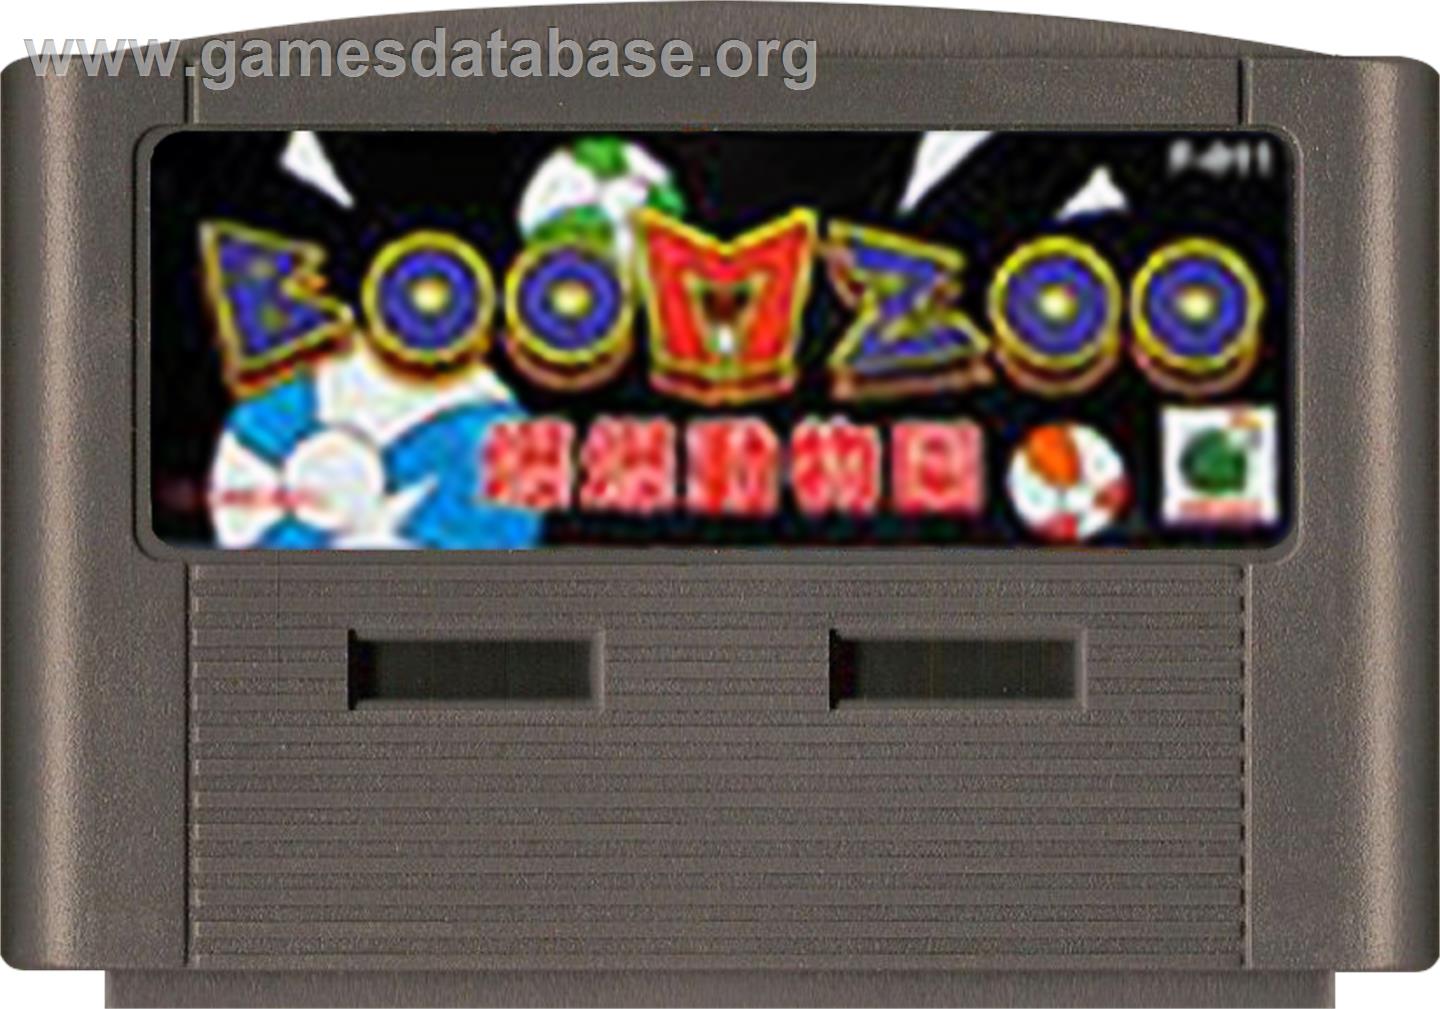 Boom Zoo - Funtech Super Acan - Artwork - Cartridge